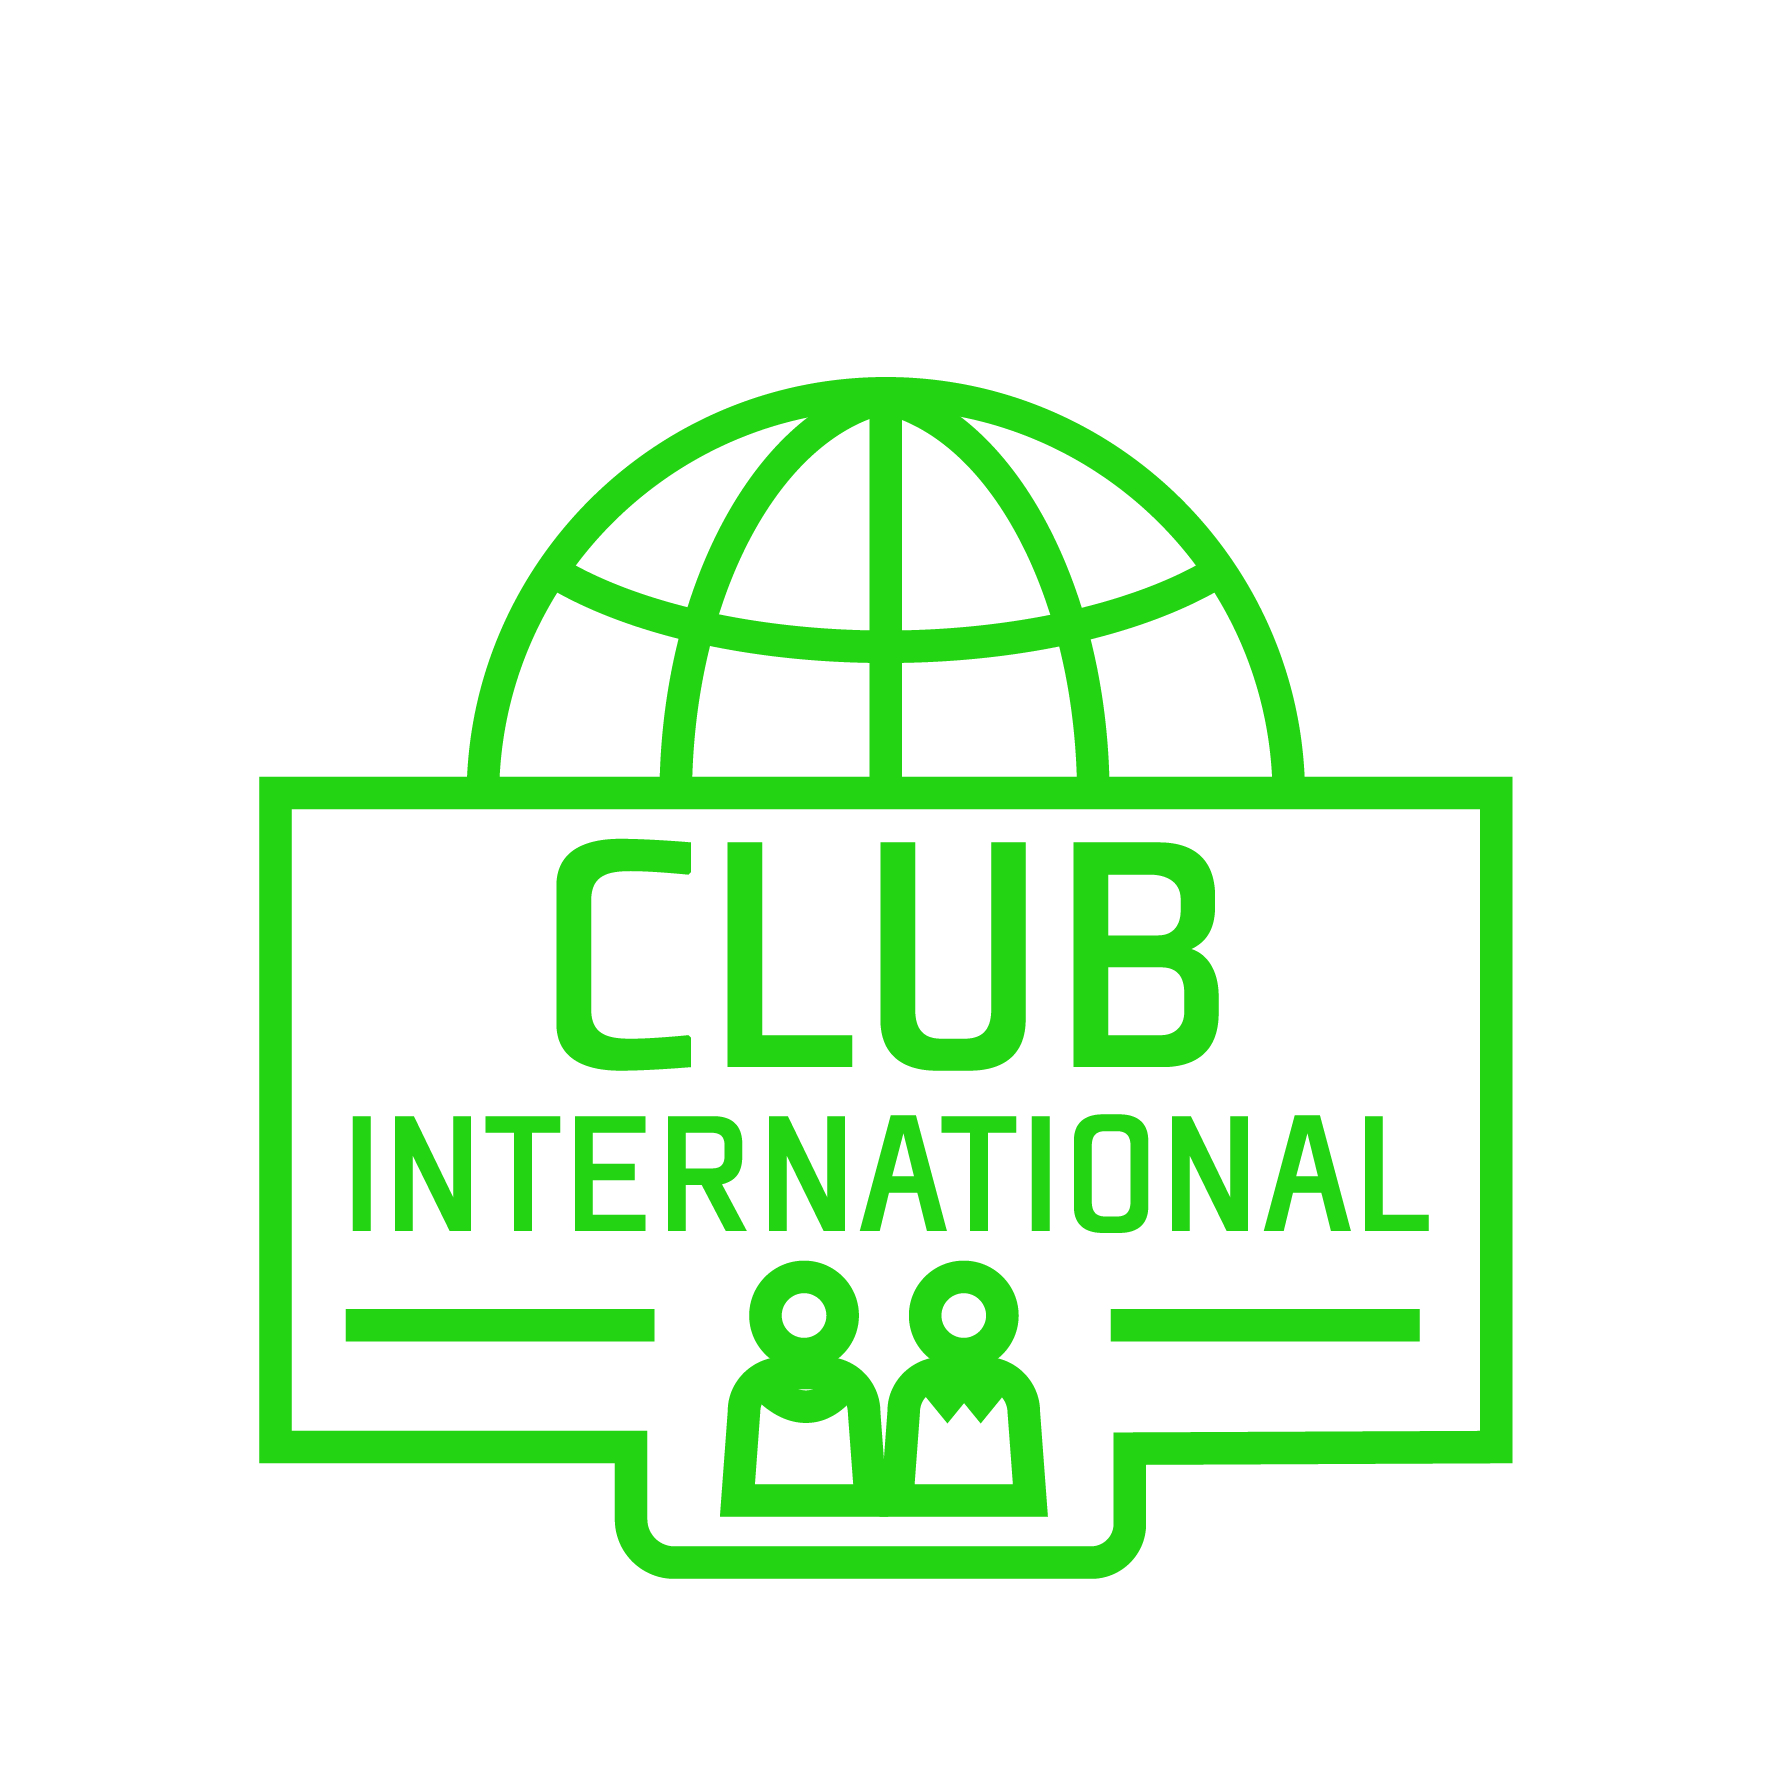 Club internacional